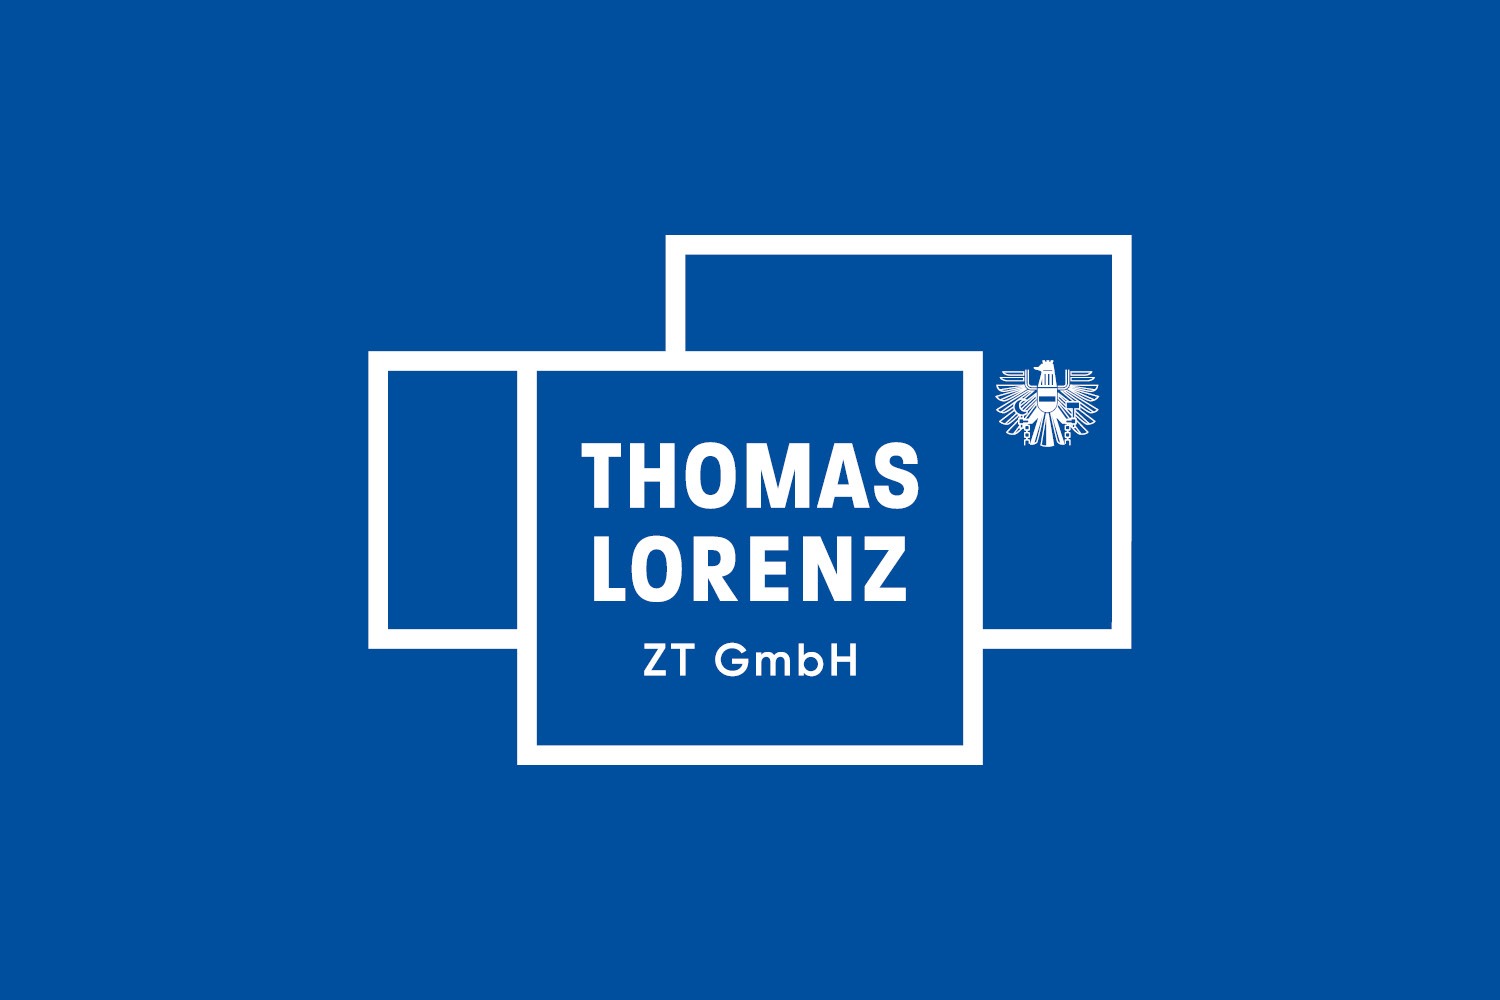 Thomas Lorenz ZT GmbH logo.